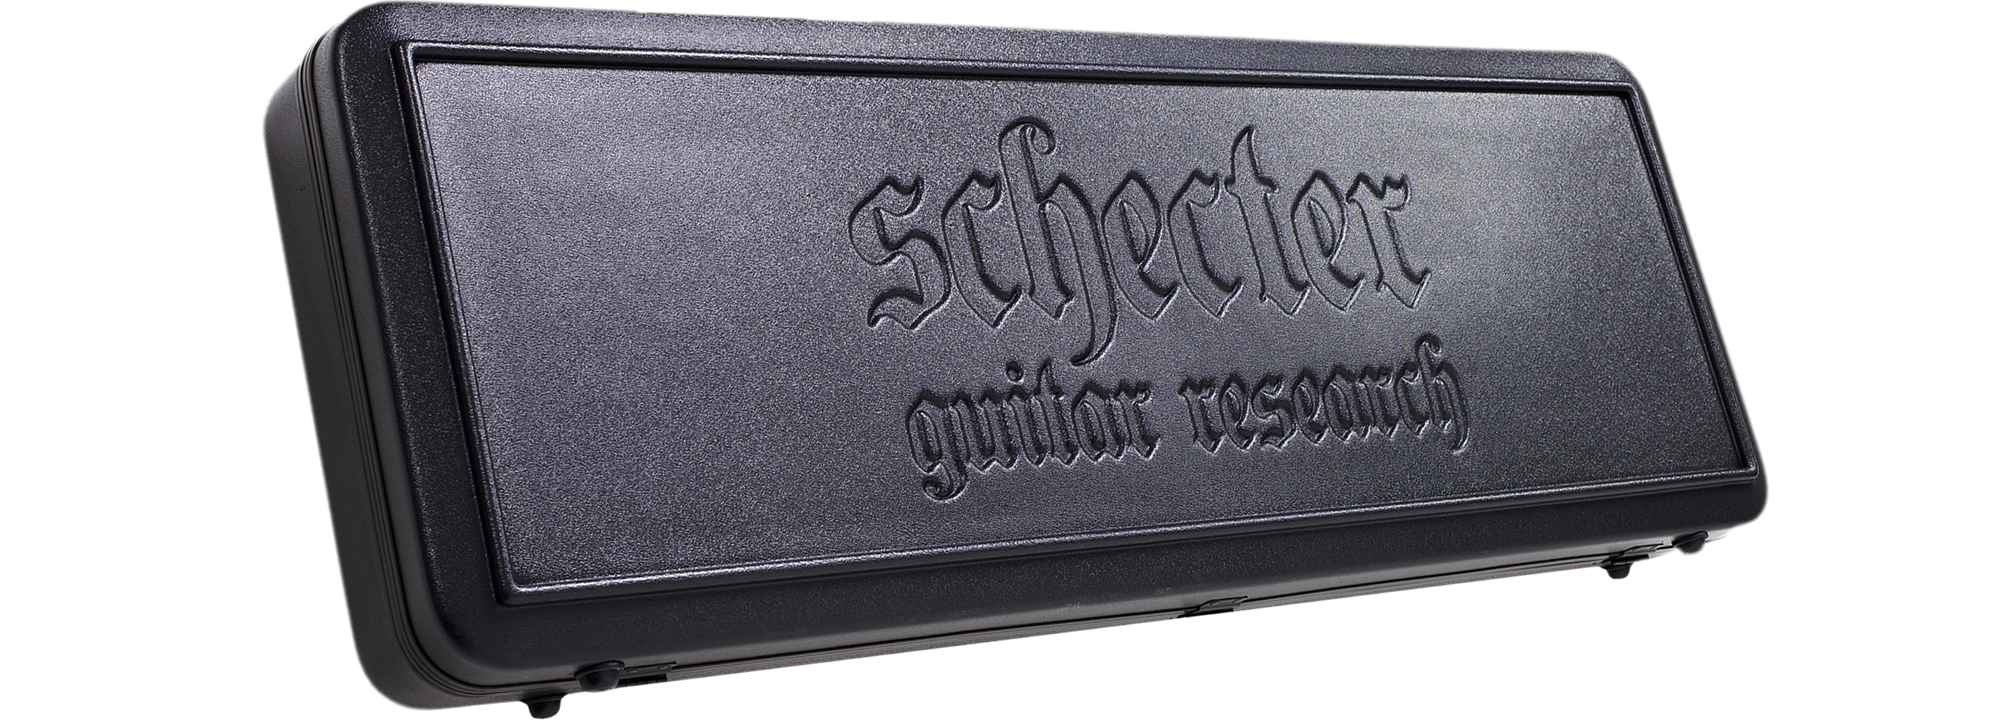 1622 SGR-Universal Guitar Hardcase